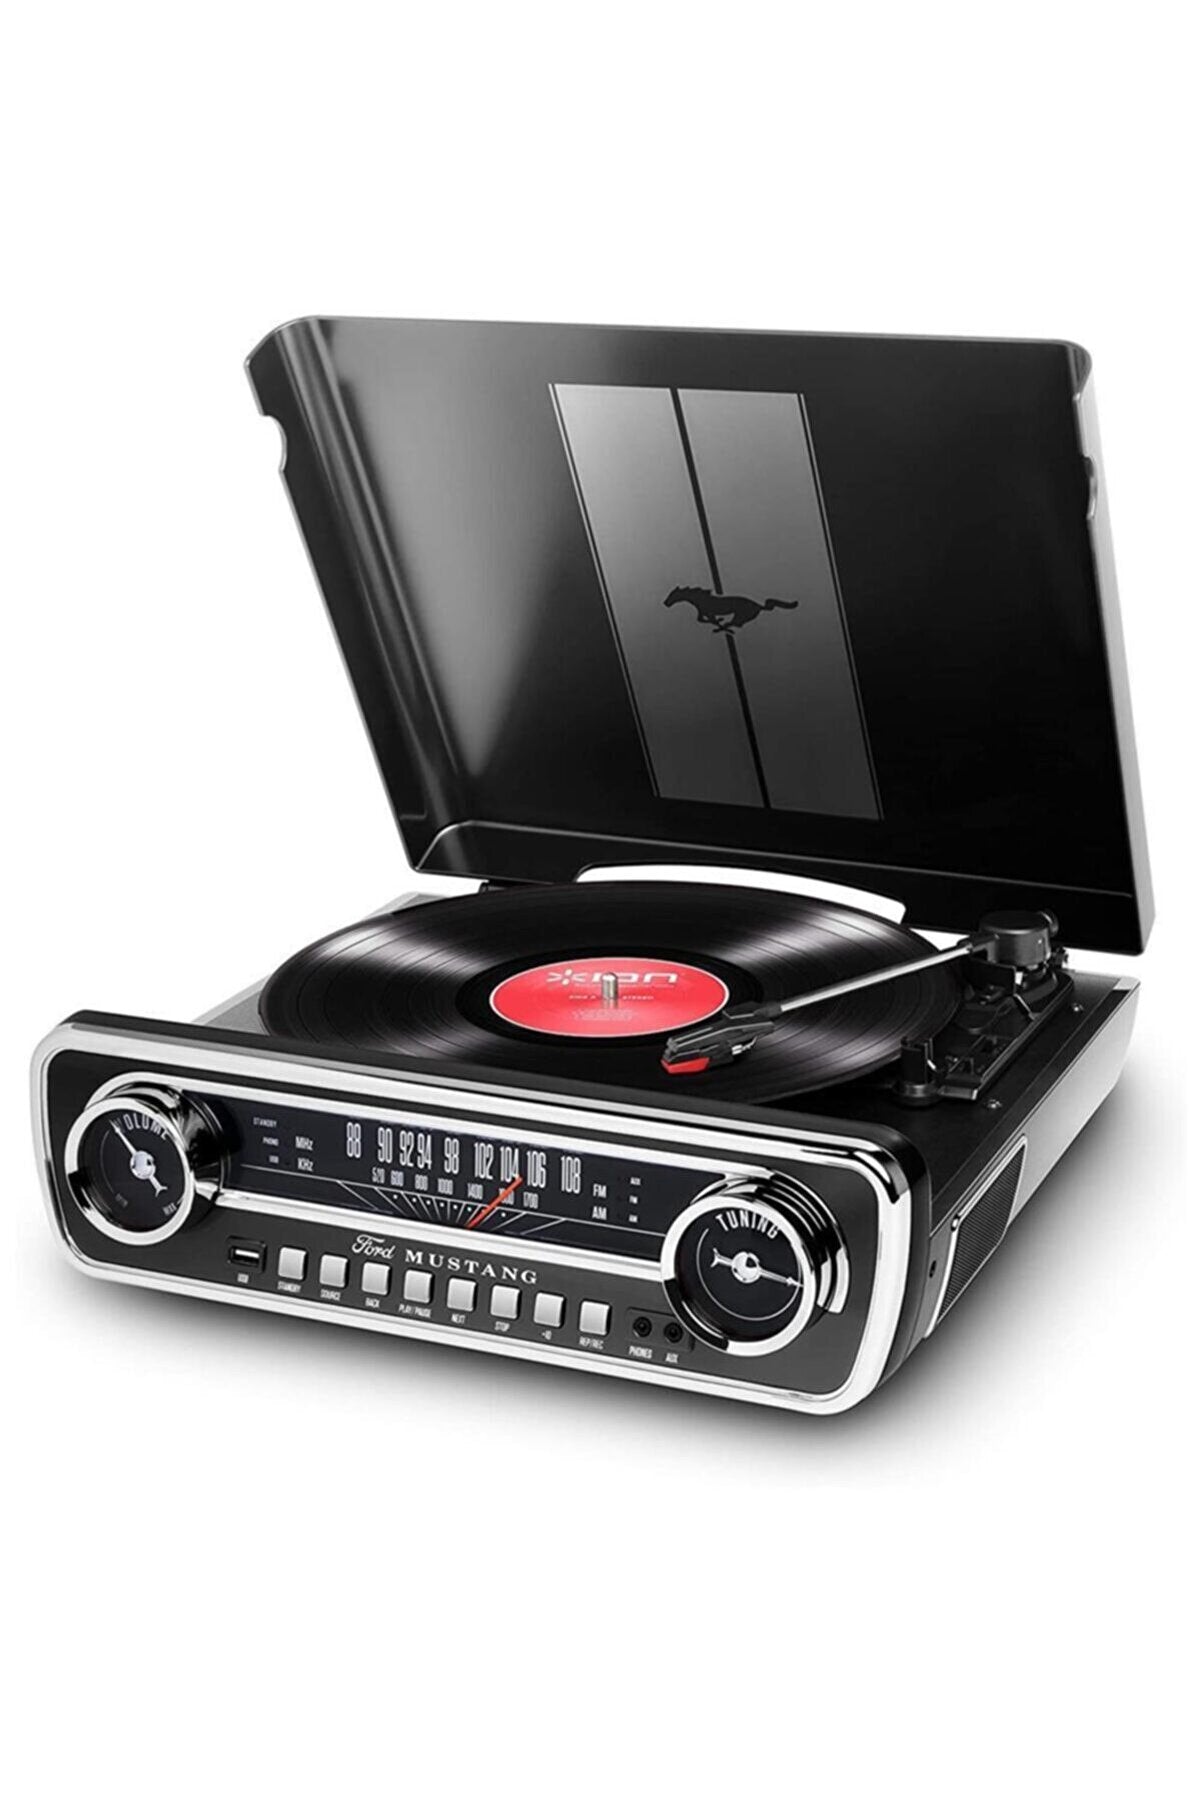 ION Audio Mustang LP 4 in 1 Müzik Sistemi Pikap - Eklektik House